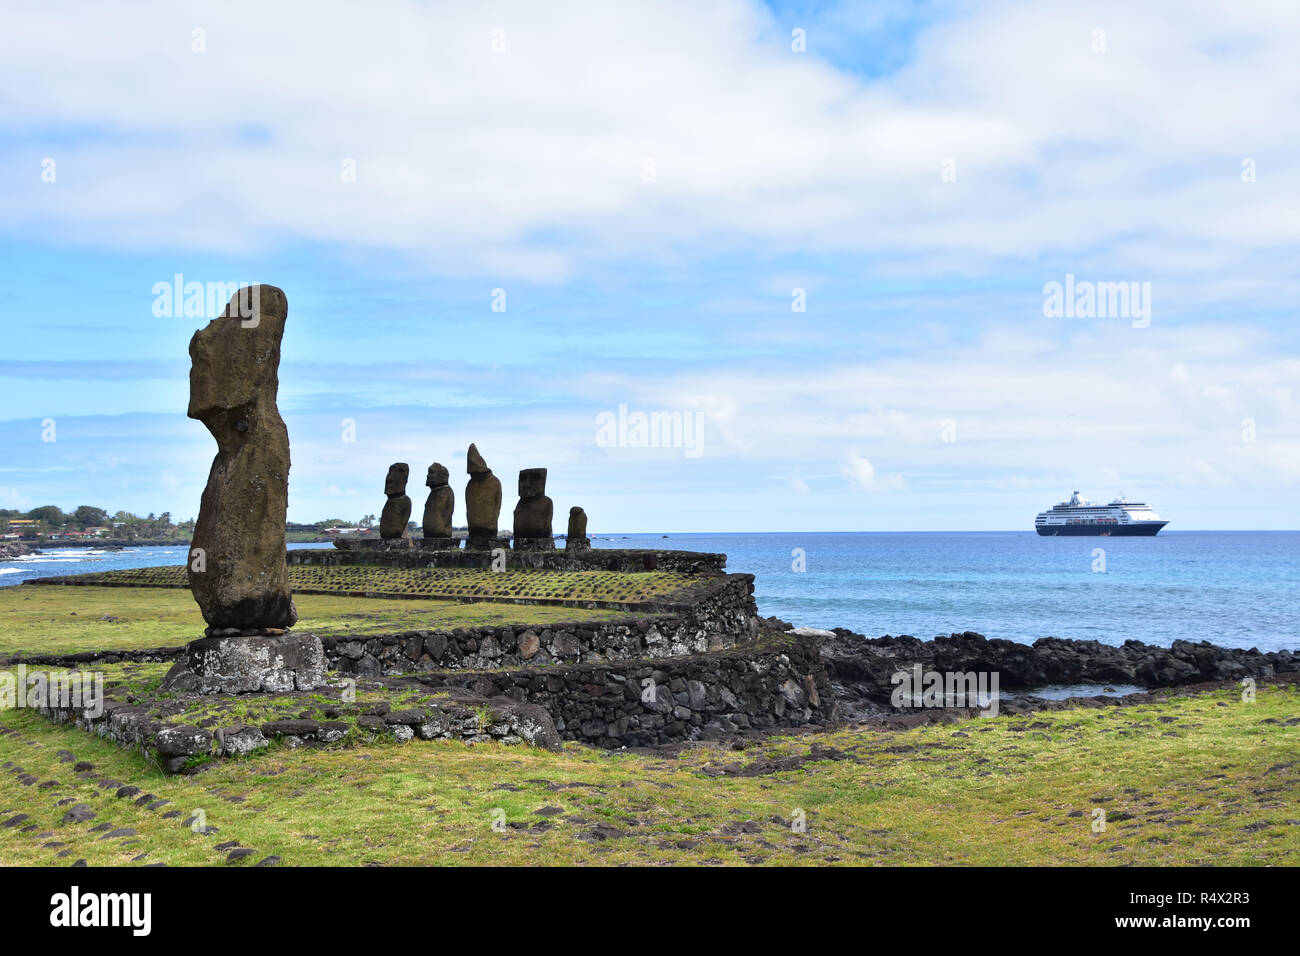 Moai all'Tahai complesso cerimoniale, Isola di Pasqua (Rapa Nui) . Ahu Tahai in primo piano e Ahu Vai Ure in background. Nave da crociera: Ms Maasdam Foto Stock